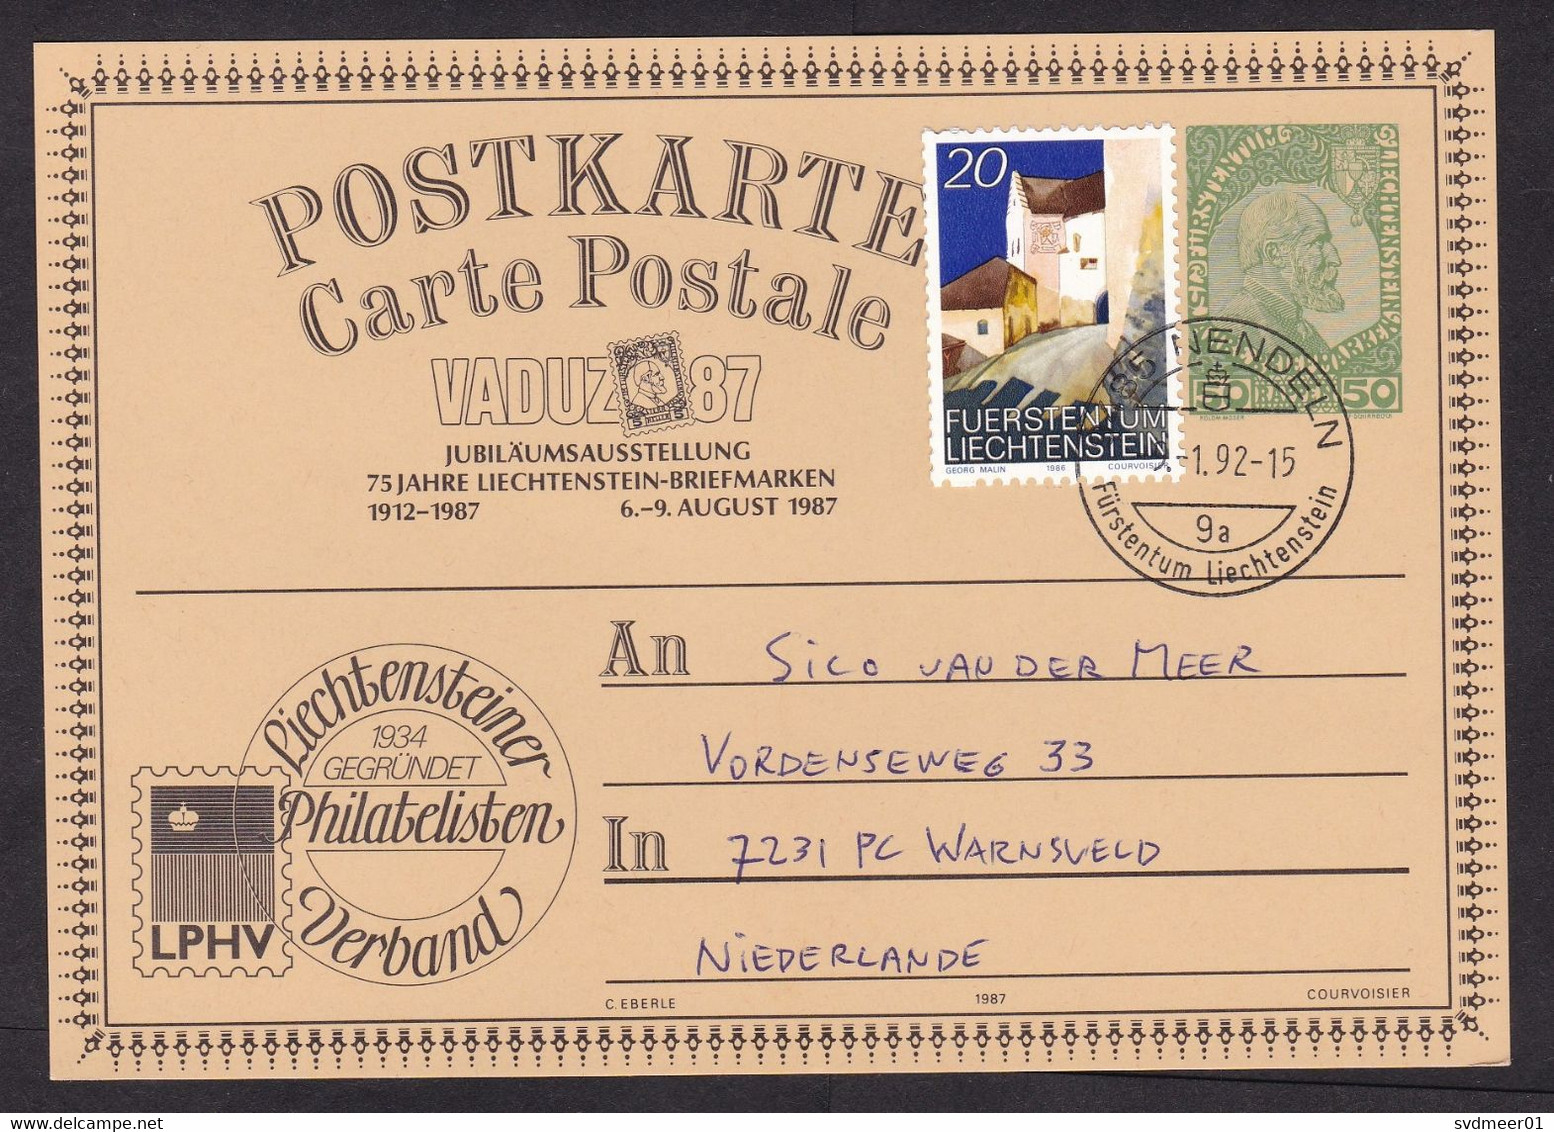 Liechtenstein: Stationery Postcard To Netherlands, 1992, 1 Extra Stamp, Philately, Postal History (traces Of Use) - Briefe U. Dokumente